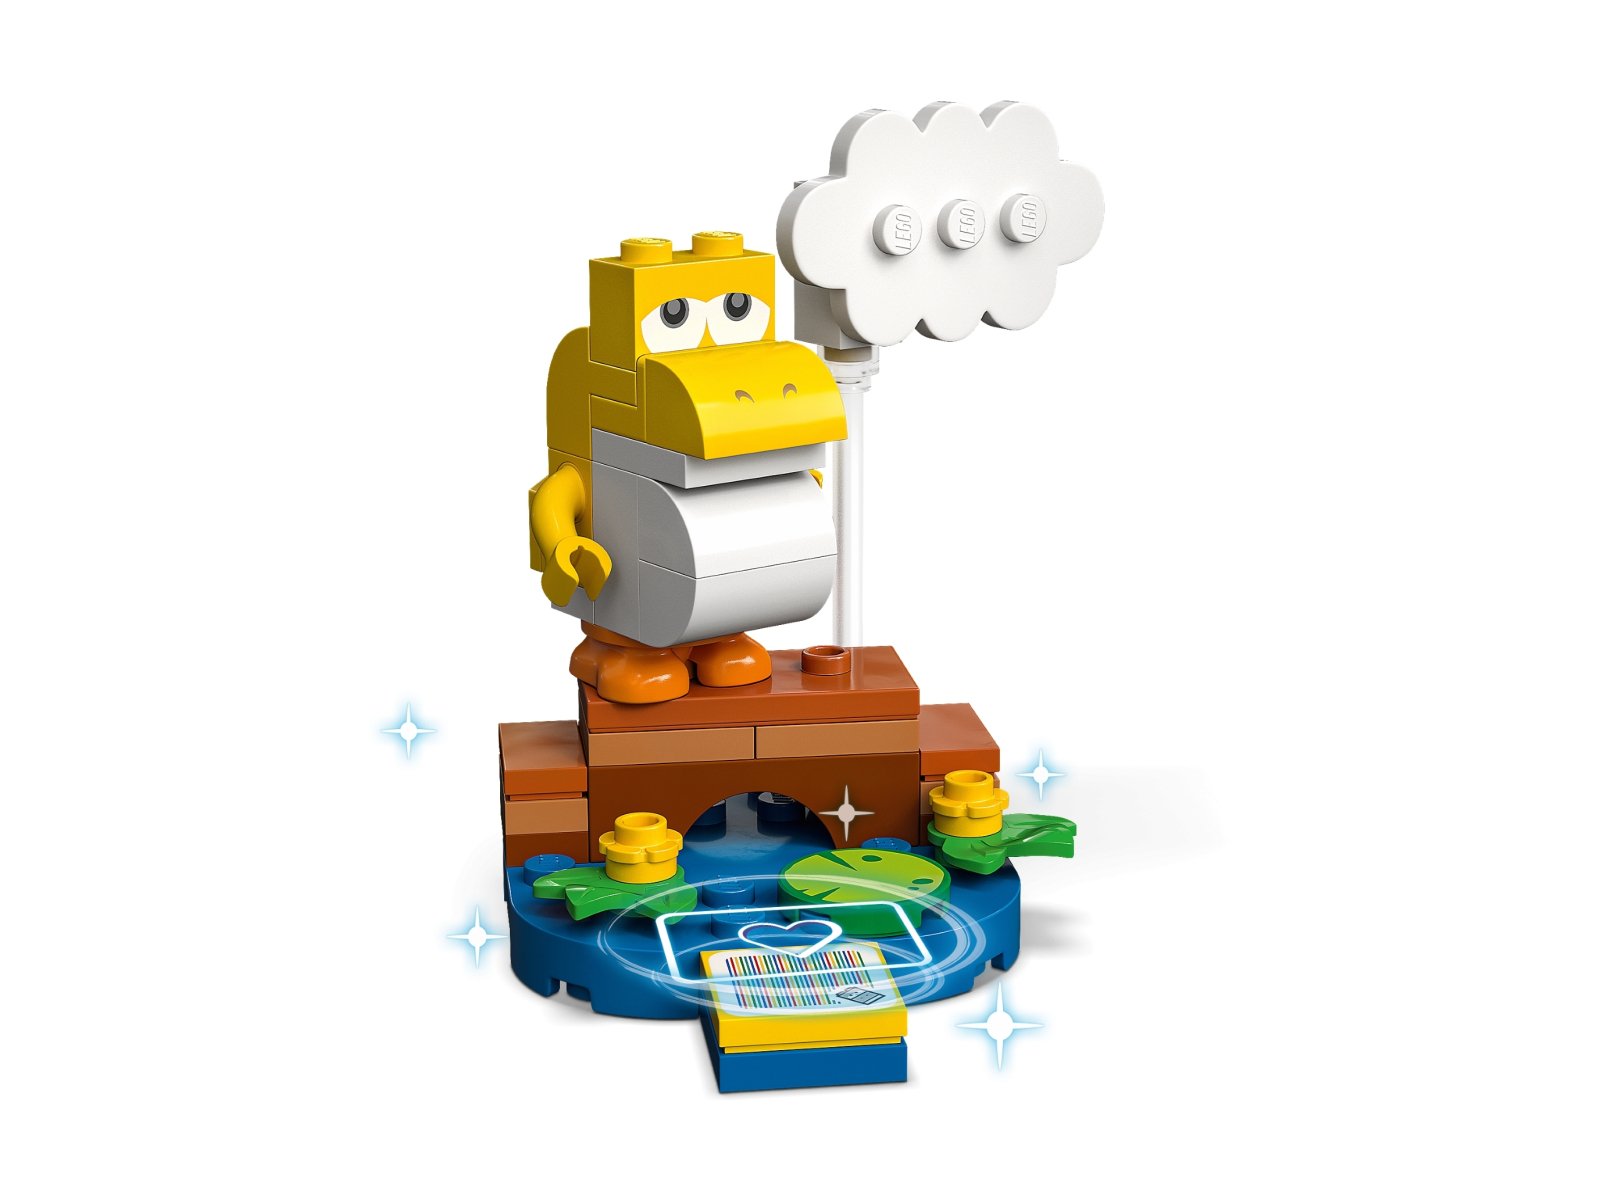 LEGO 71410 Super Mario Zestawy postaci — seria 5